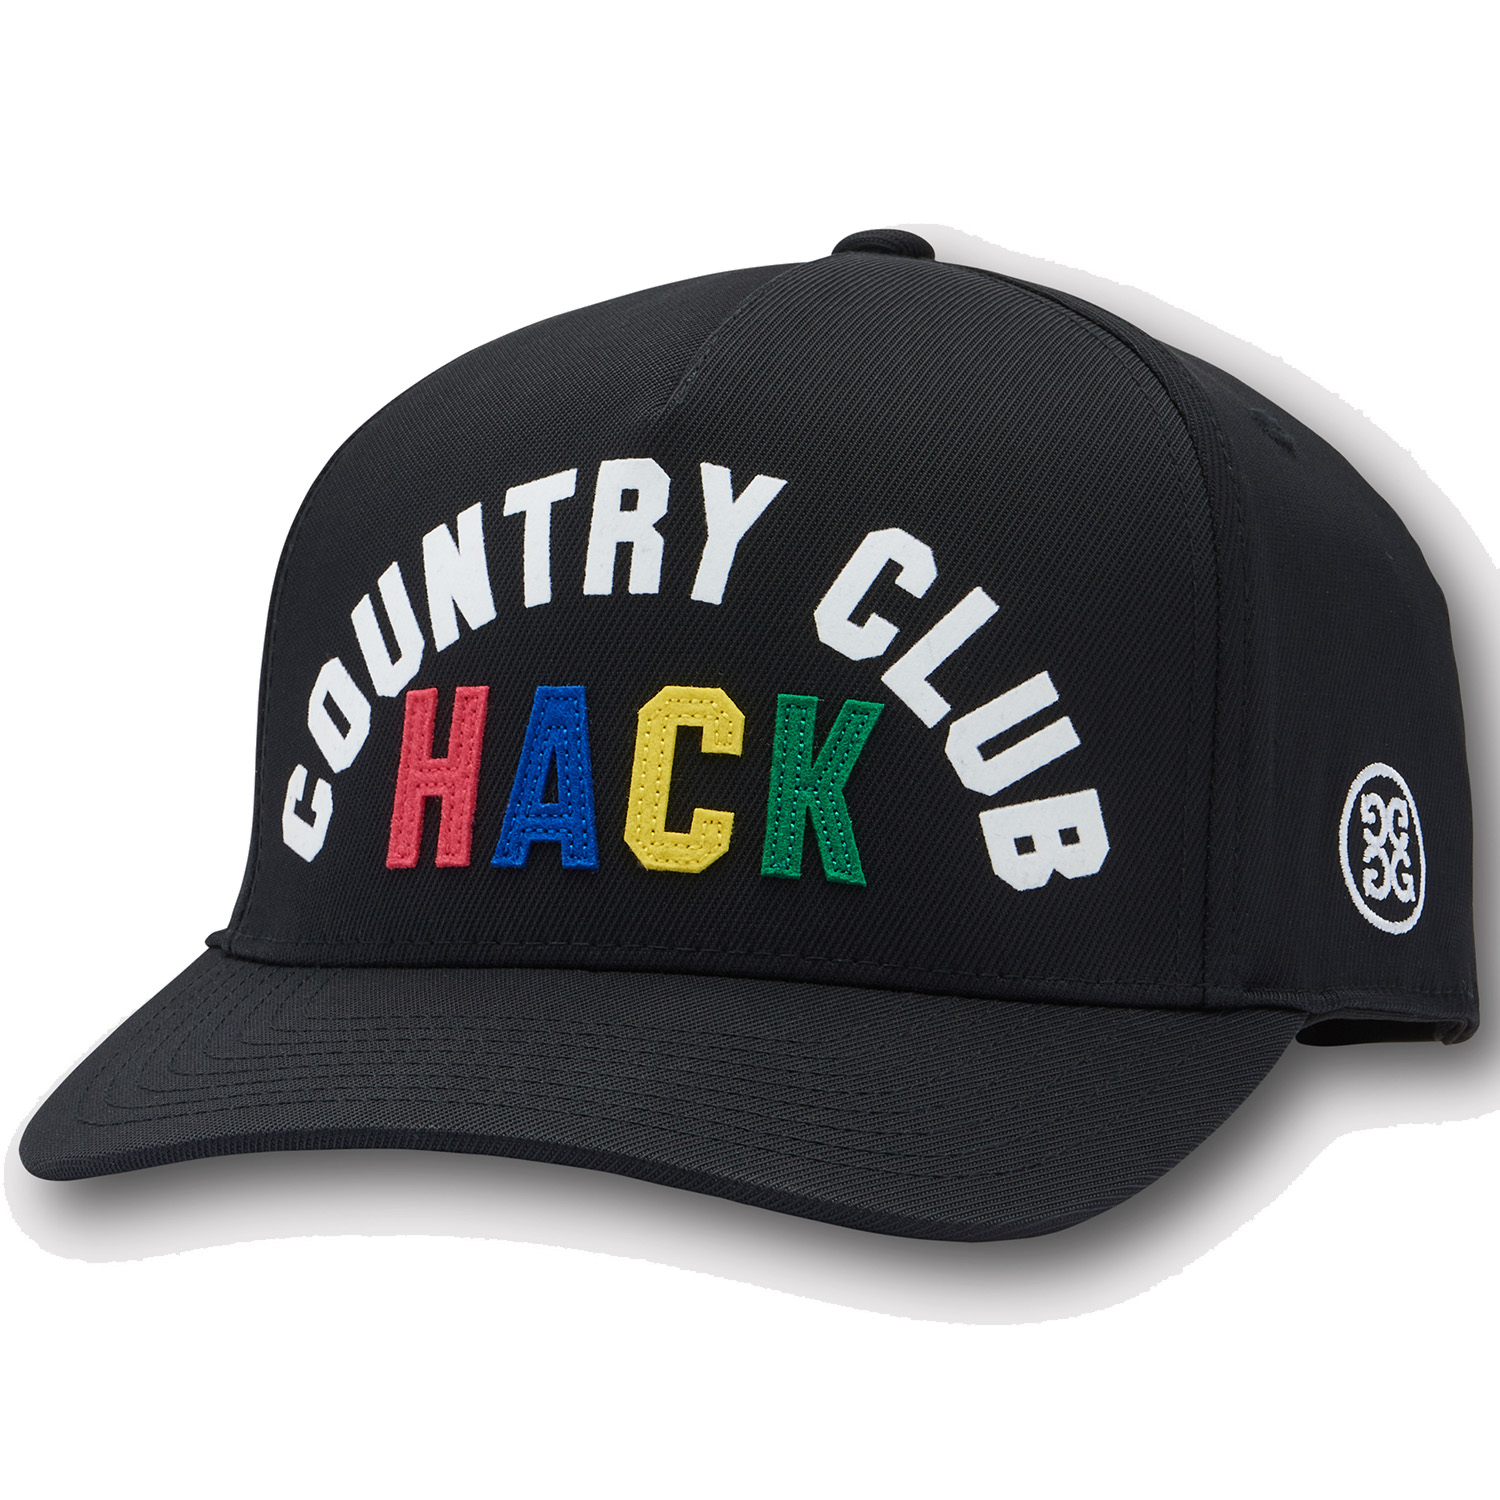 G/FORE Country Club Hack Snapback Baseball Cap